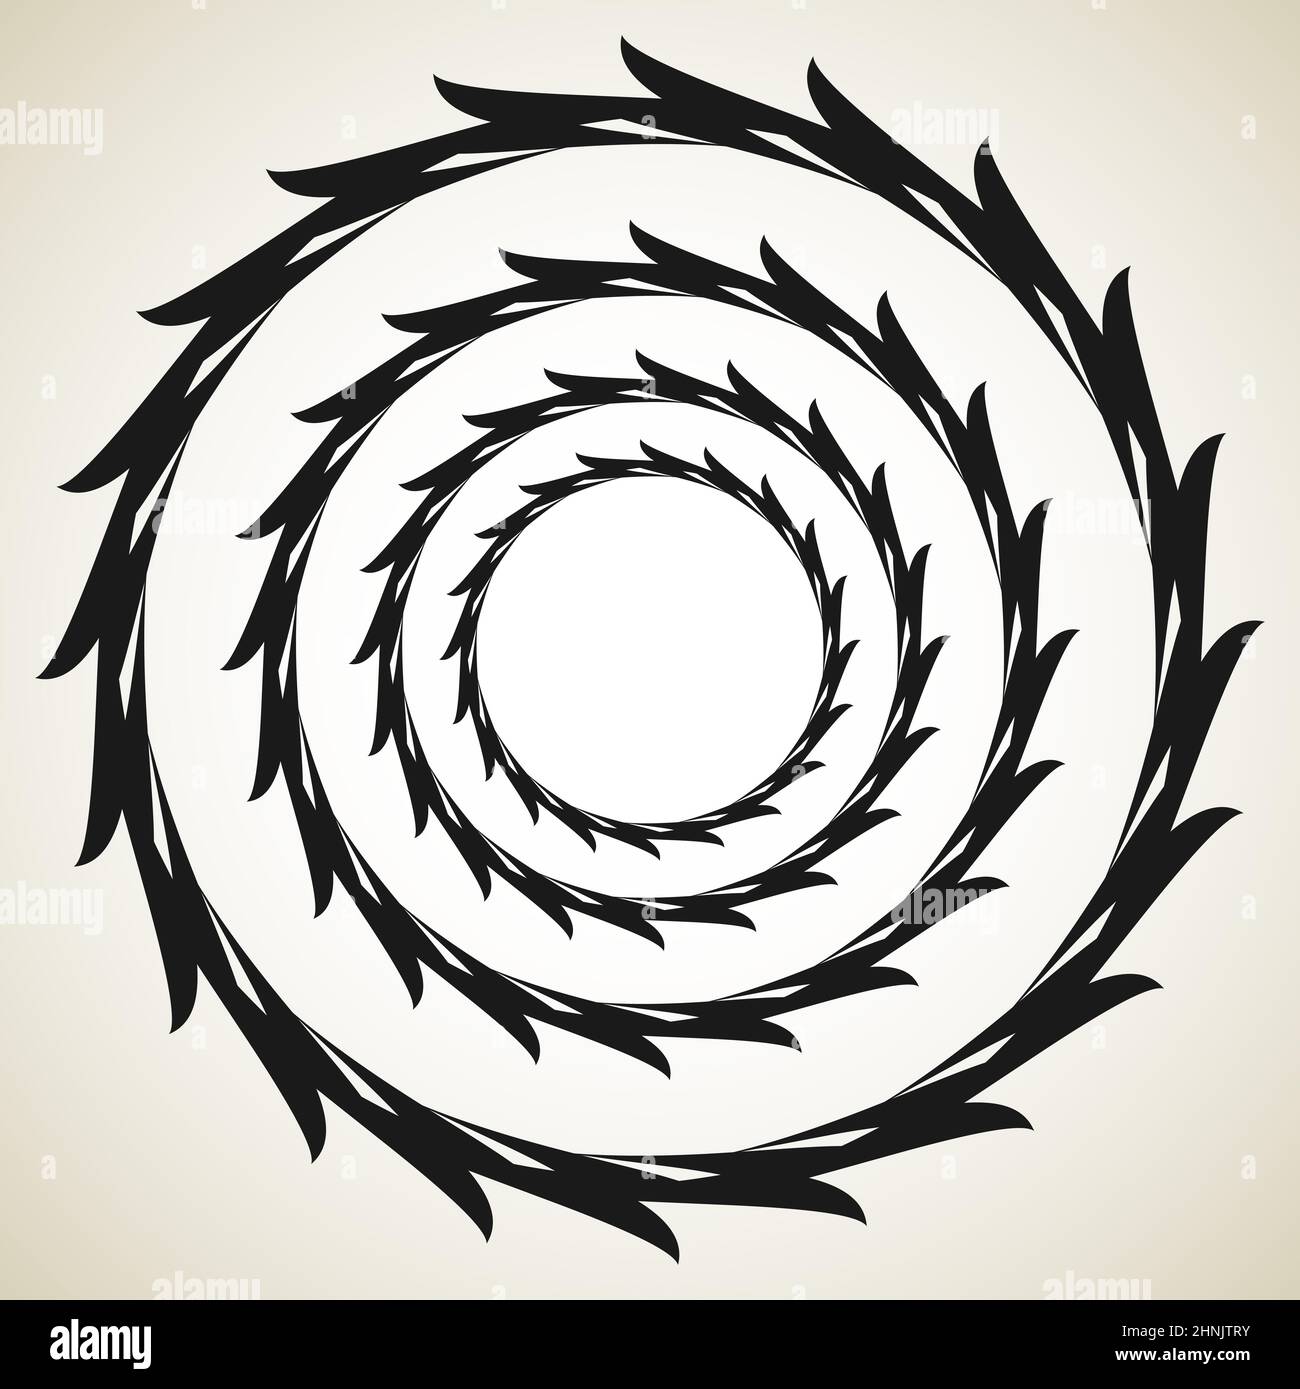 Set of spirals gradient line art, Design elements, line abstract